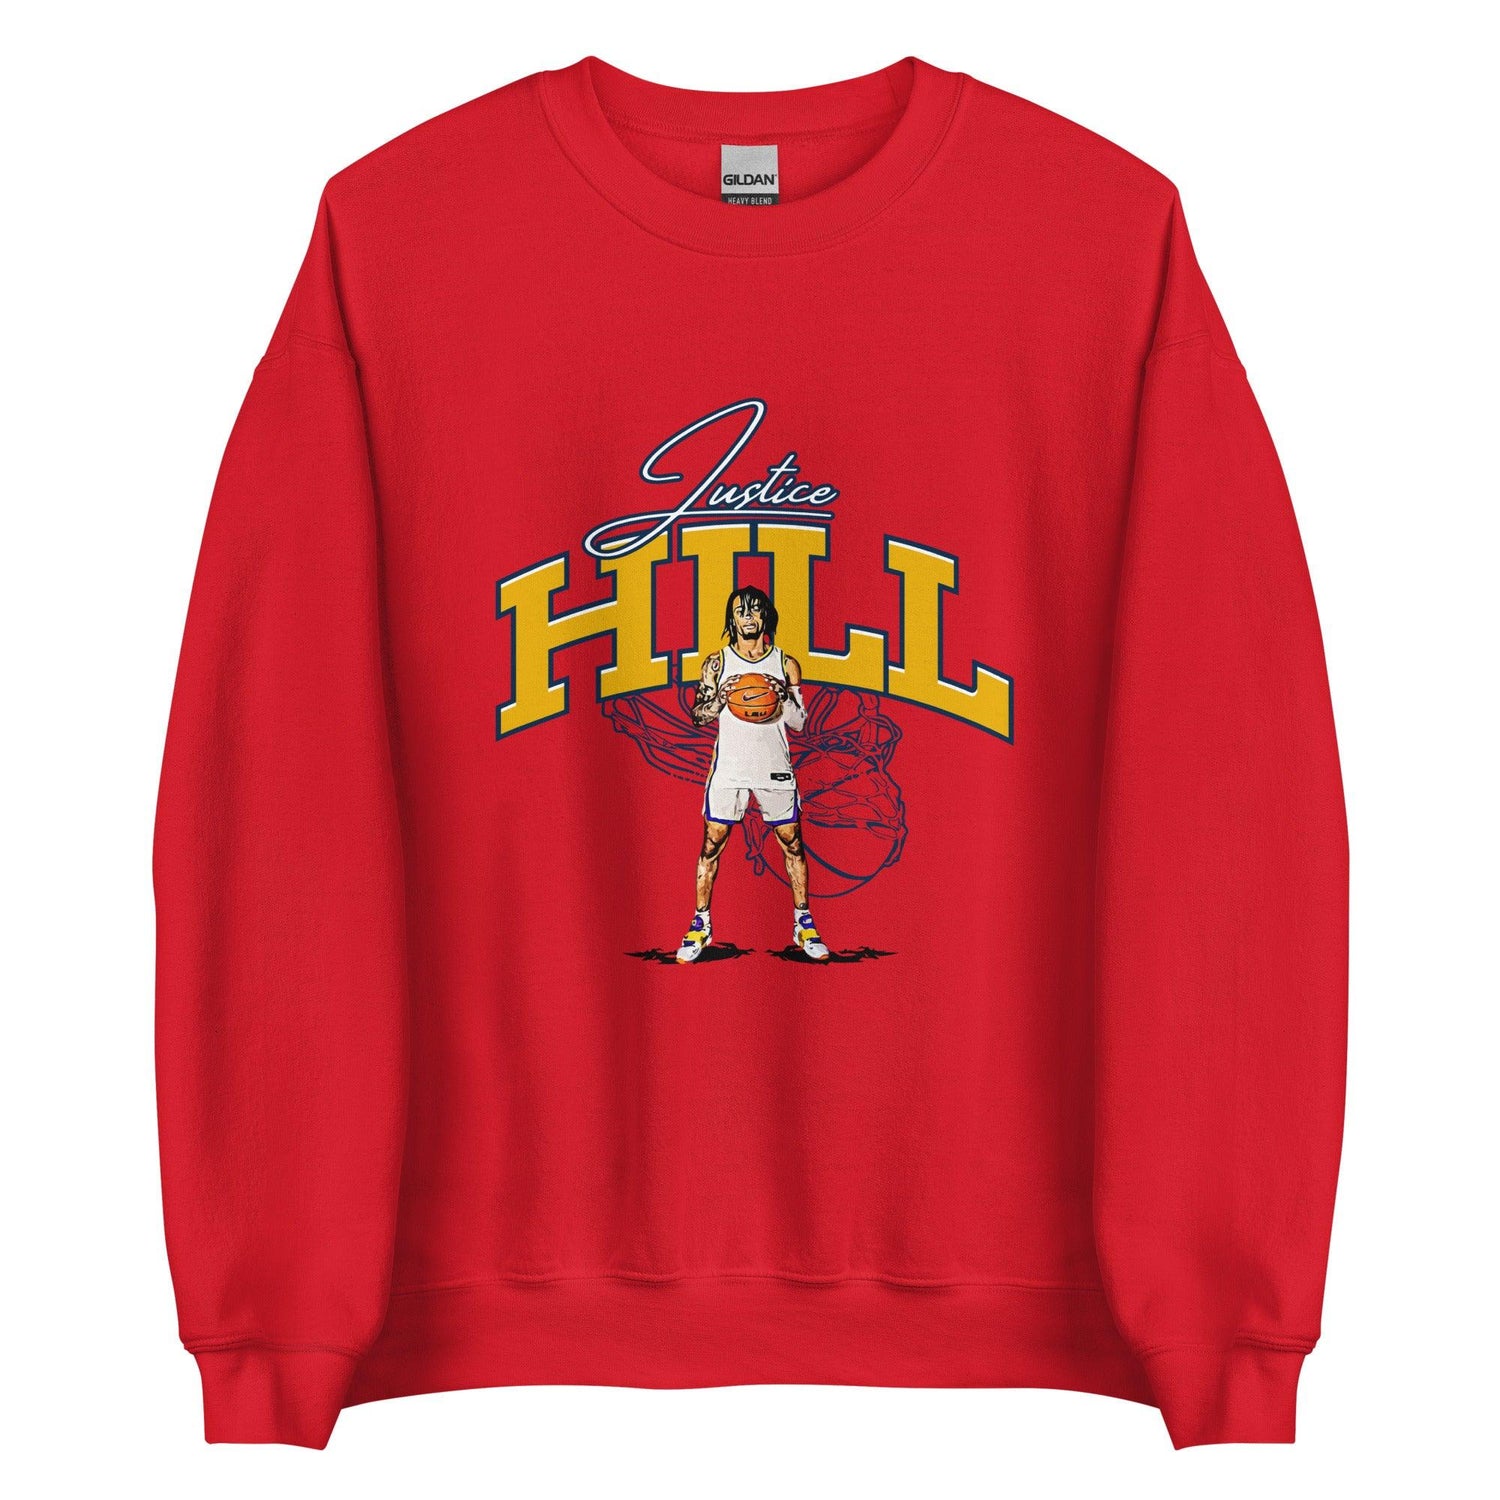 Justice Hill "Gameday" Sweatshirt - Fan Arch